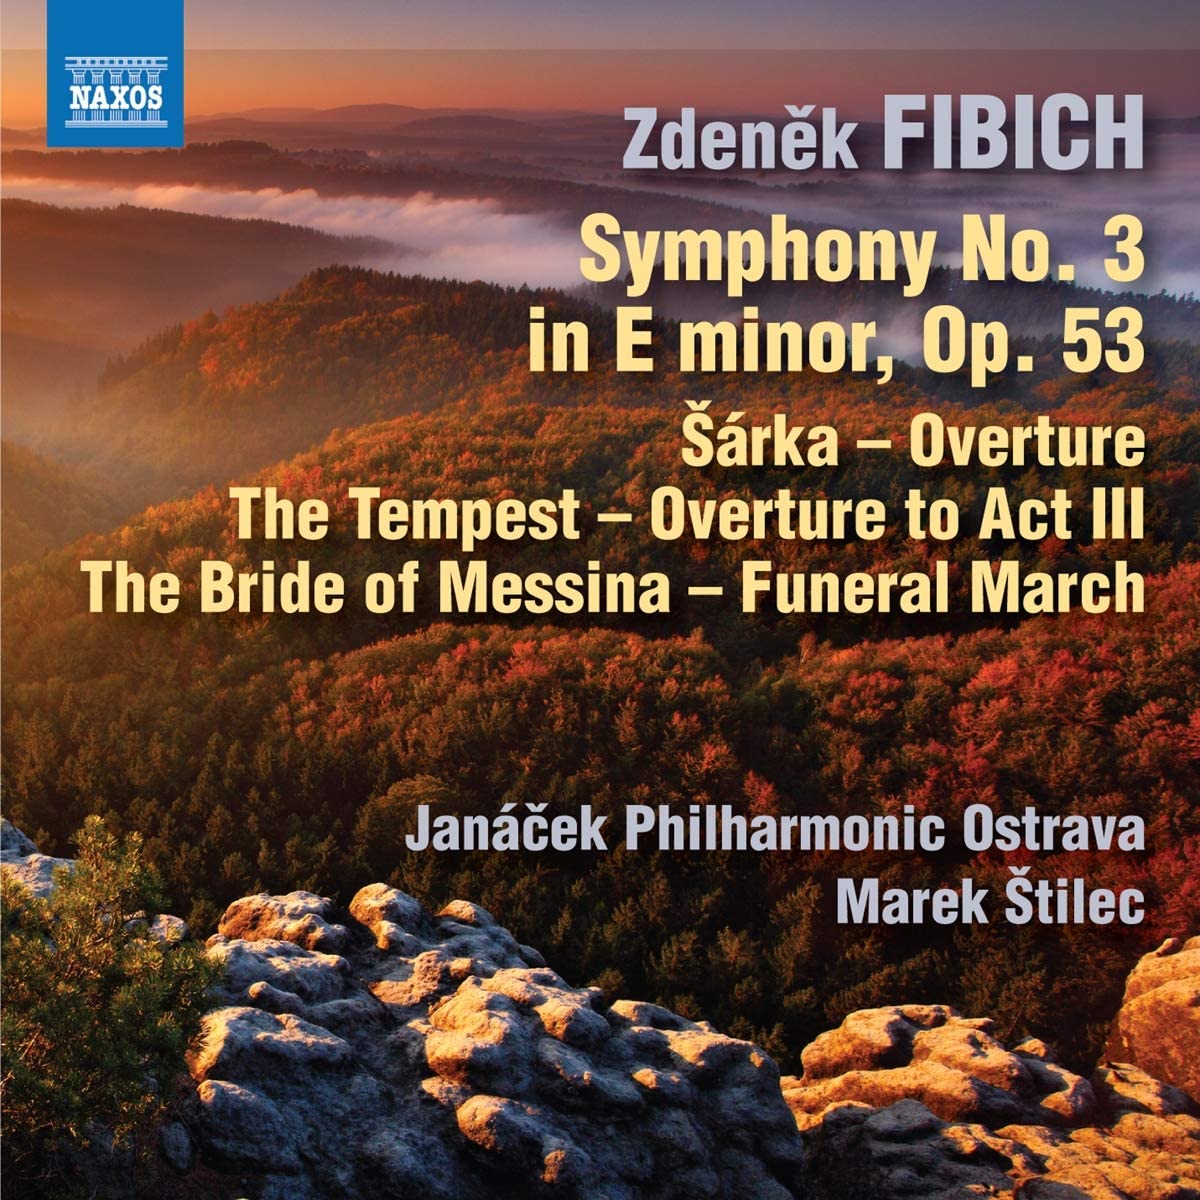 Review of FIBICH Symphony No 3 (Štilec)